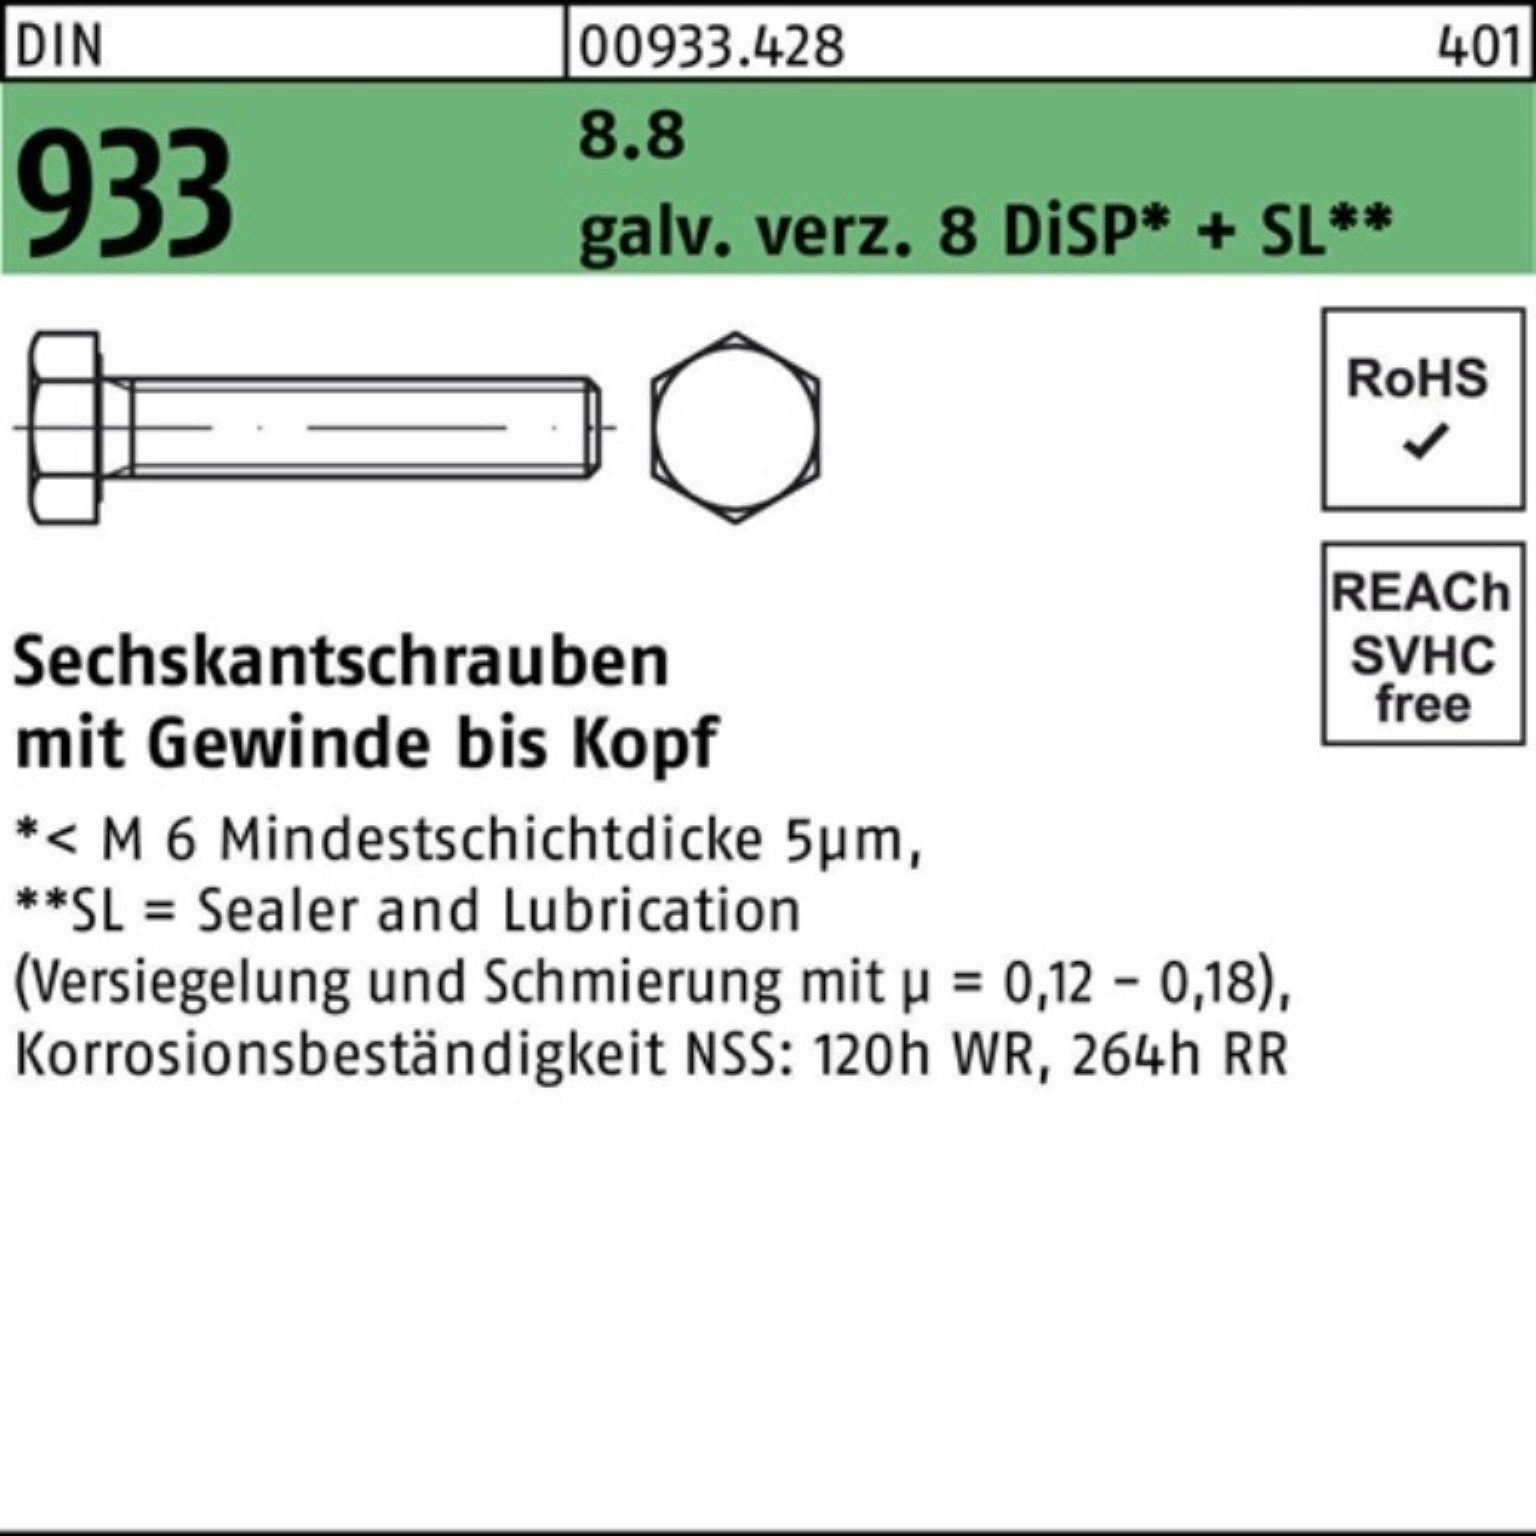 Reyher Sechskantschraube 100er Pack Sechskantschraube DIN 933 VG M20x 50 8.8 gal Zn 8 DiSP + SL